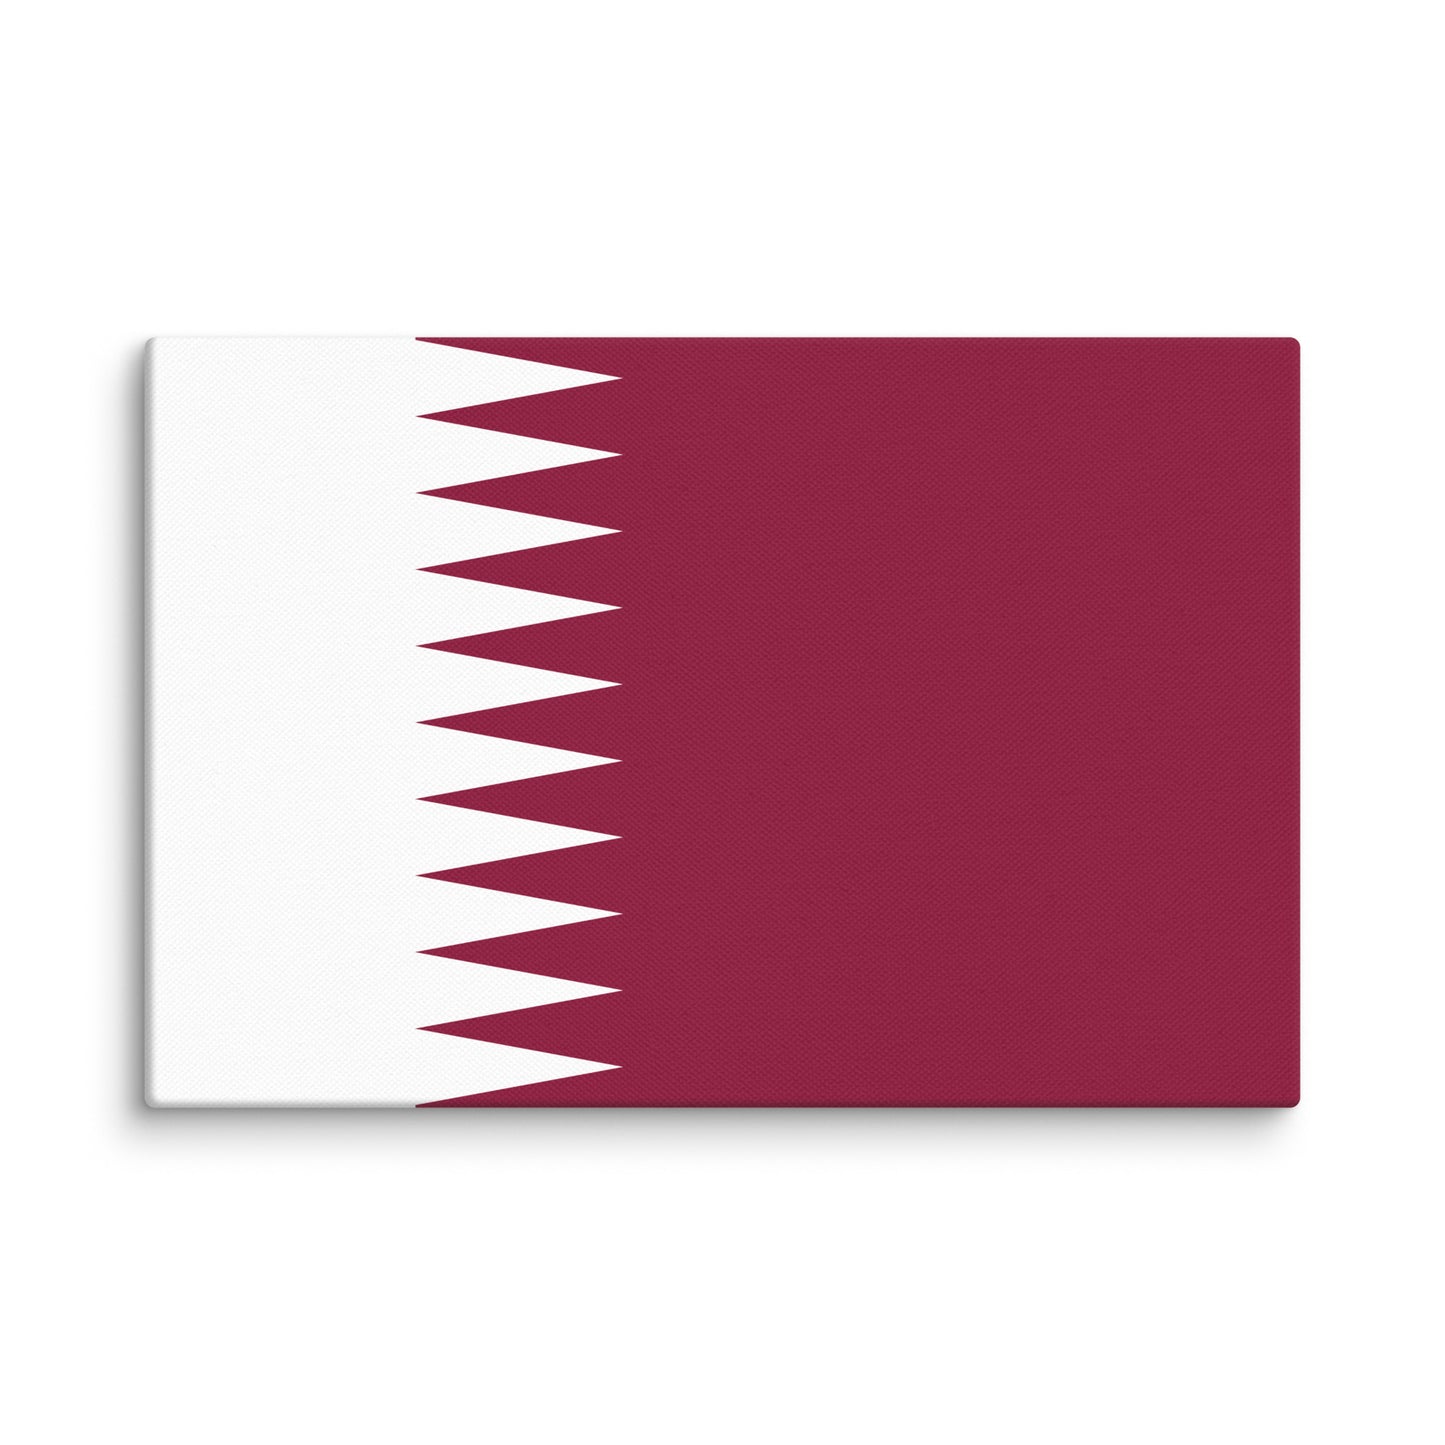 Qatar Flag _ علم قطر _ size 18x12" canvas print